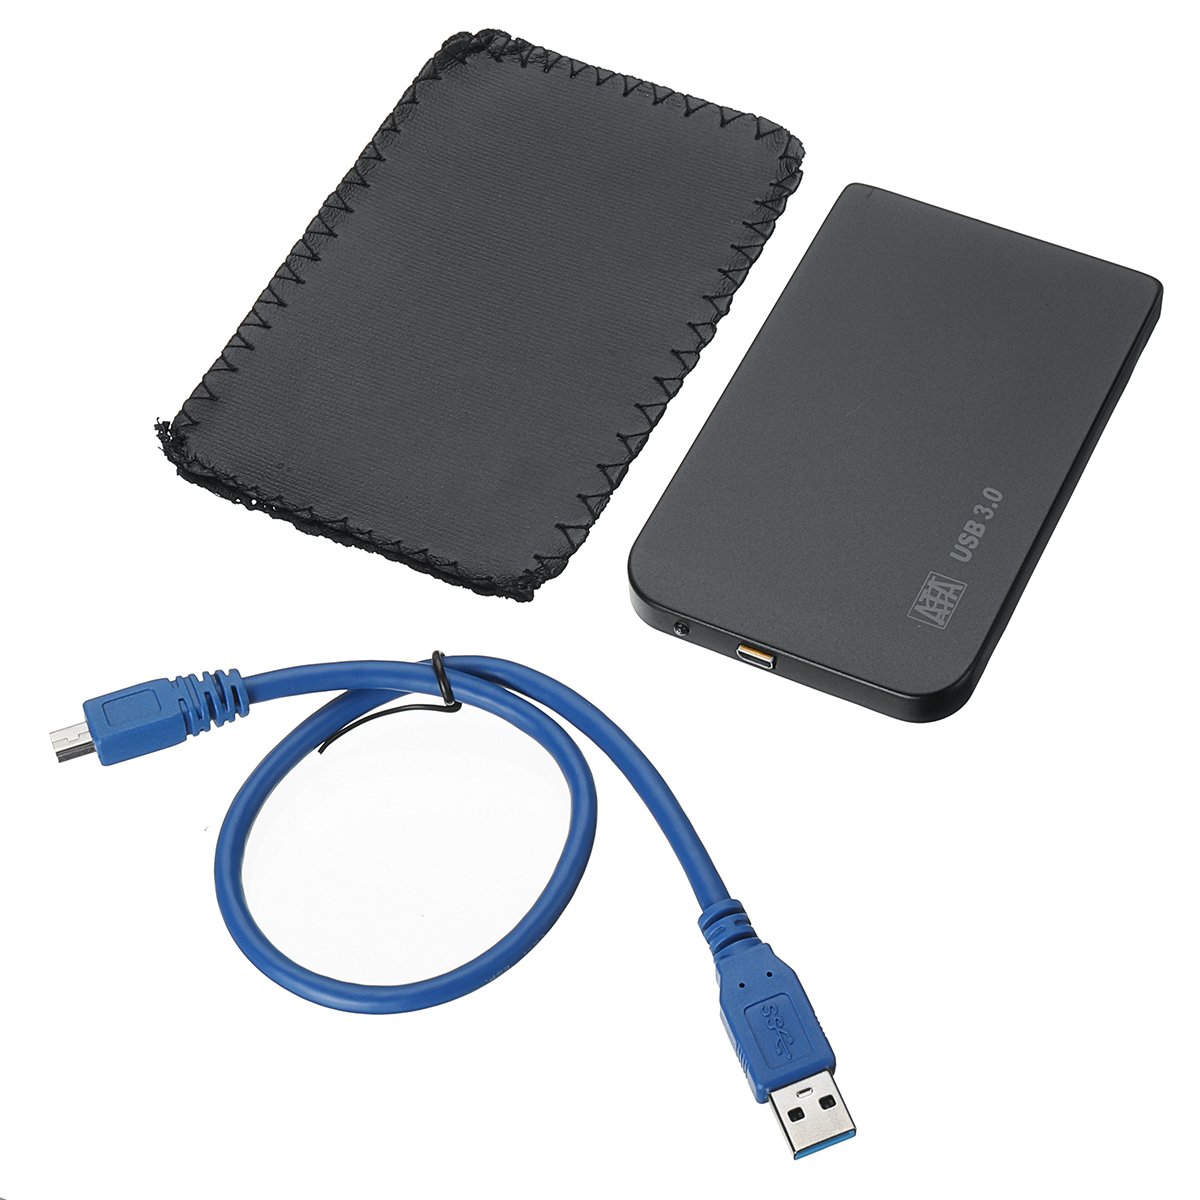 USB 3.0 SATA 2.5inch External HDD SSD Hard Drive Enclosure with Storage Bag 2